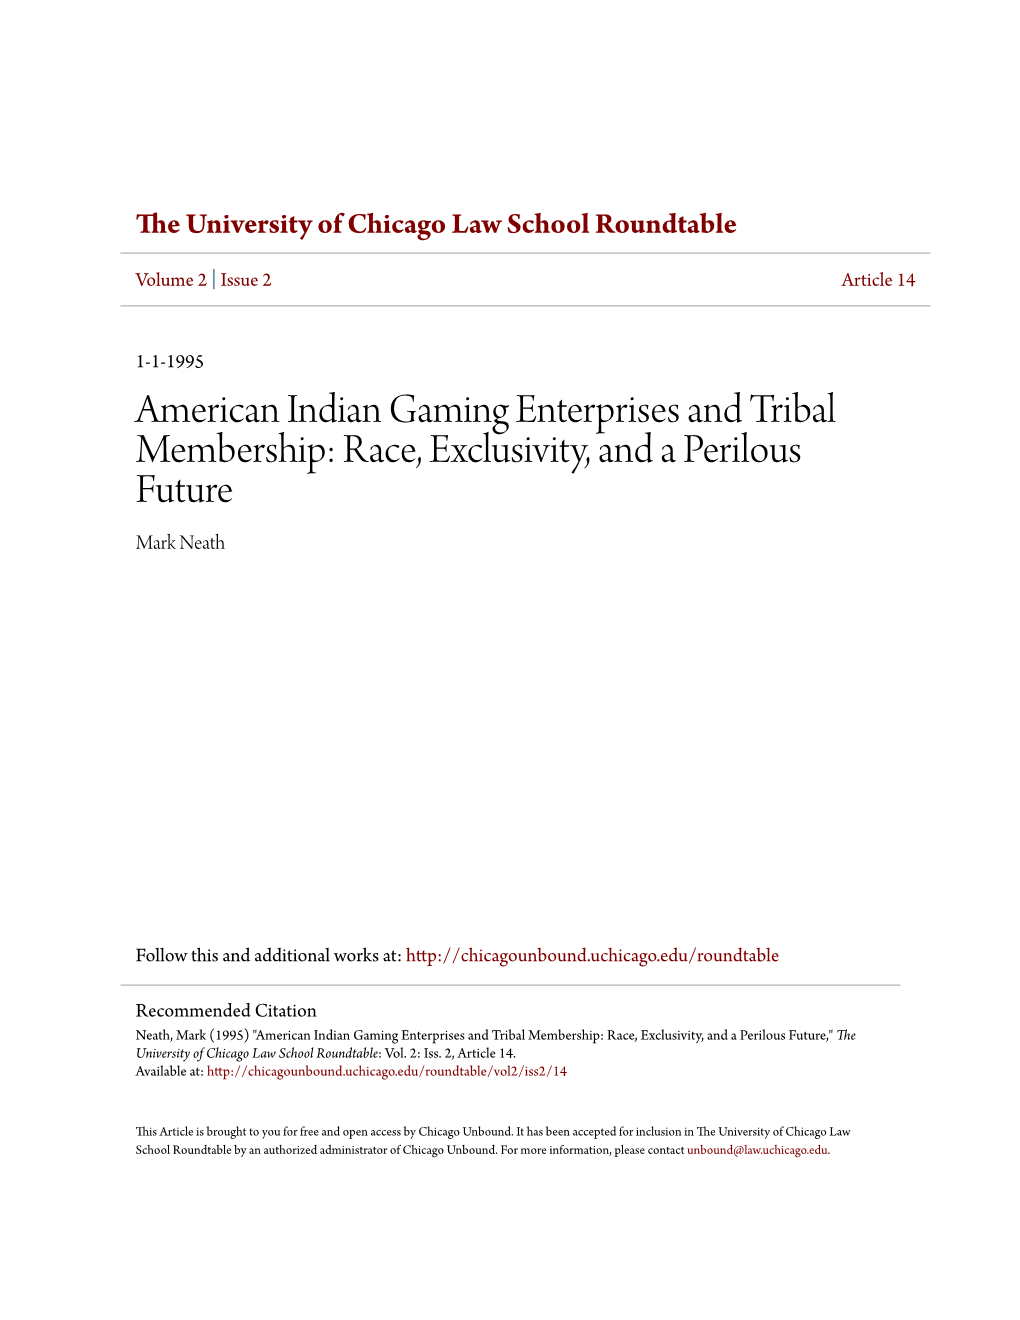 American Indian Gaming Enterprises and Tribal Membership: Race, Exclusivity, and a Perilous Future Mark Neath